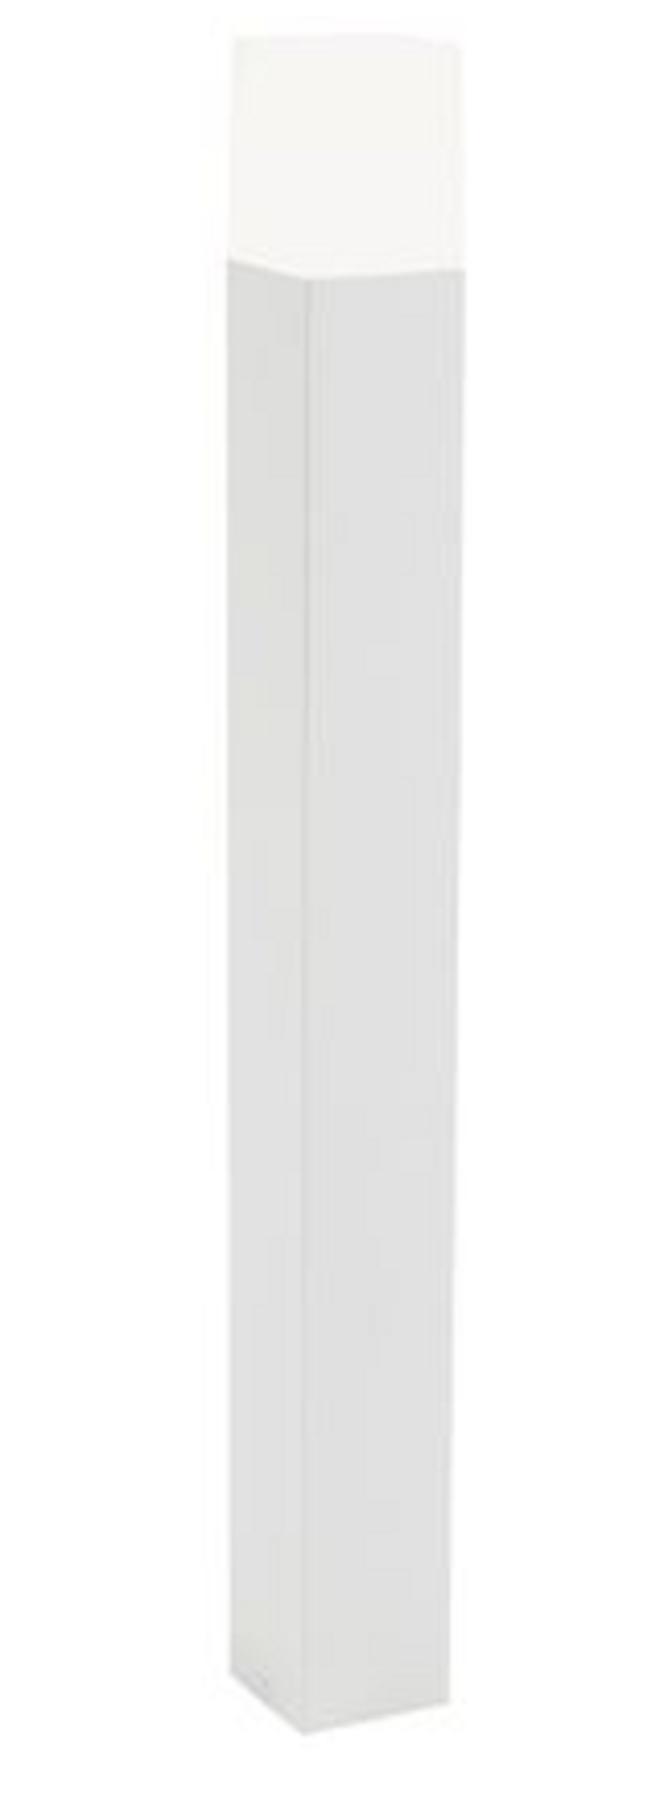 sovil sovil illuminazione mod. kube-paletto 7w led bianco 4000k 99485/02